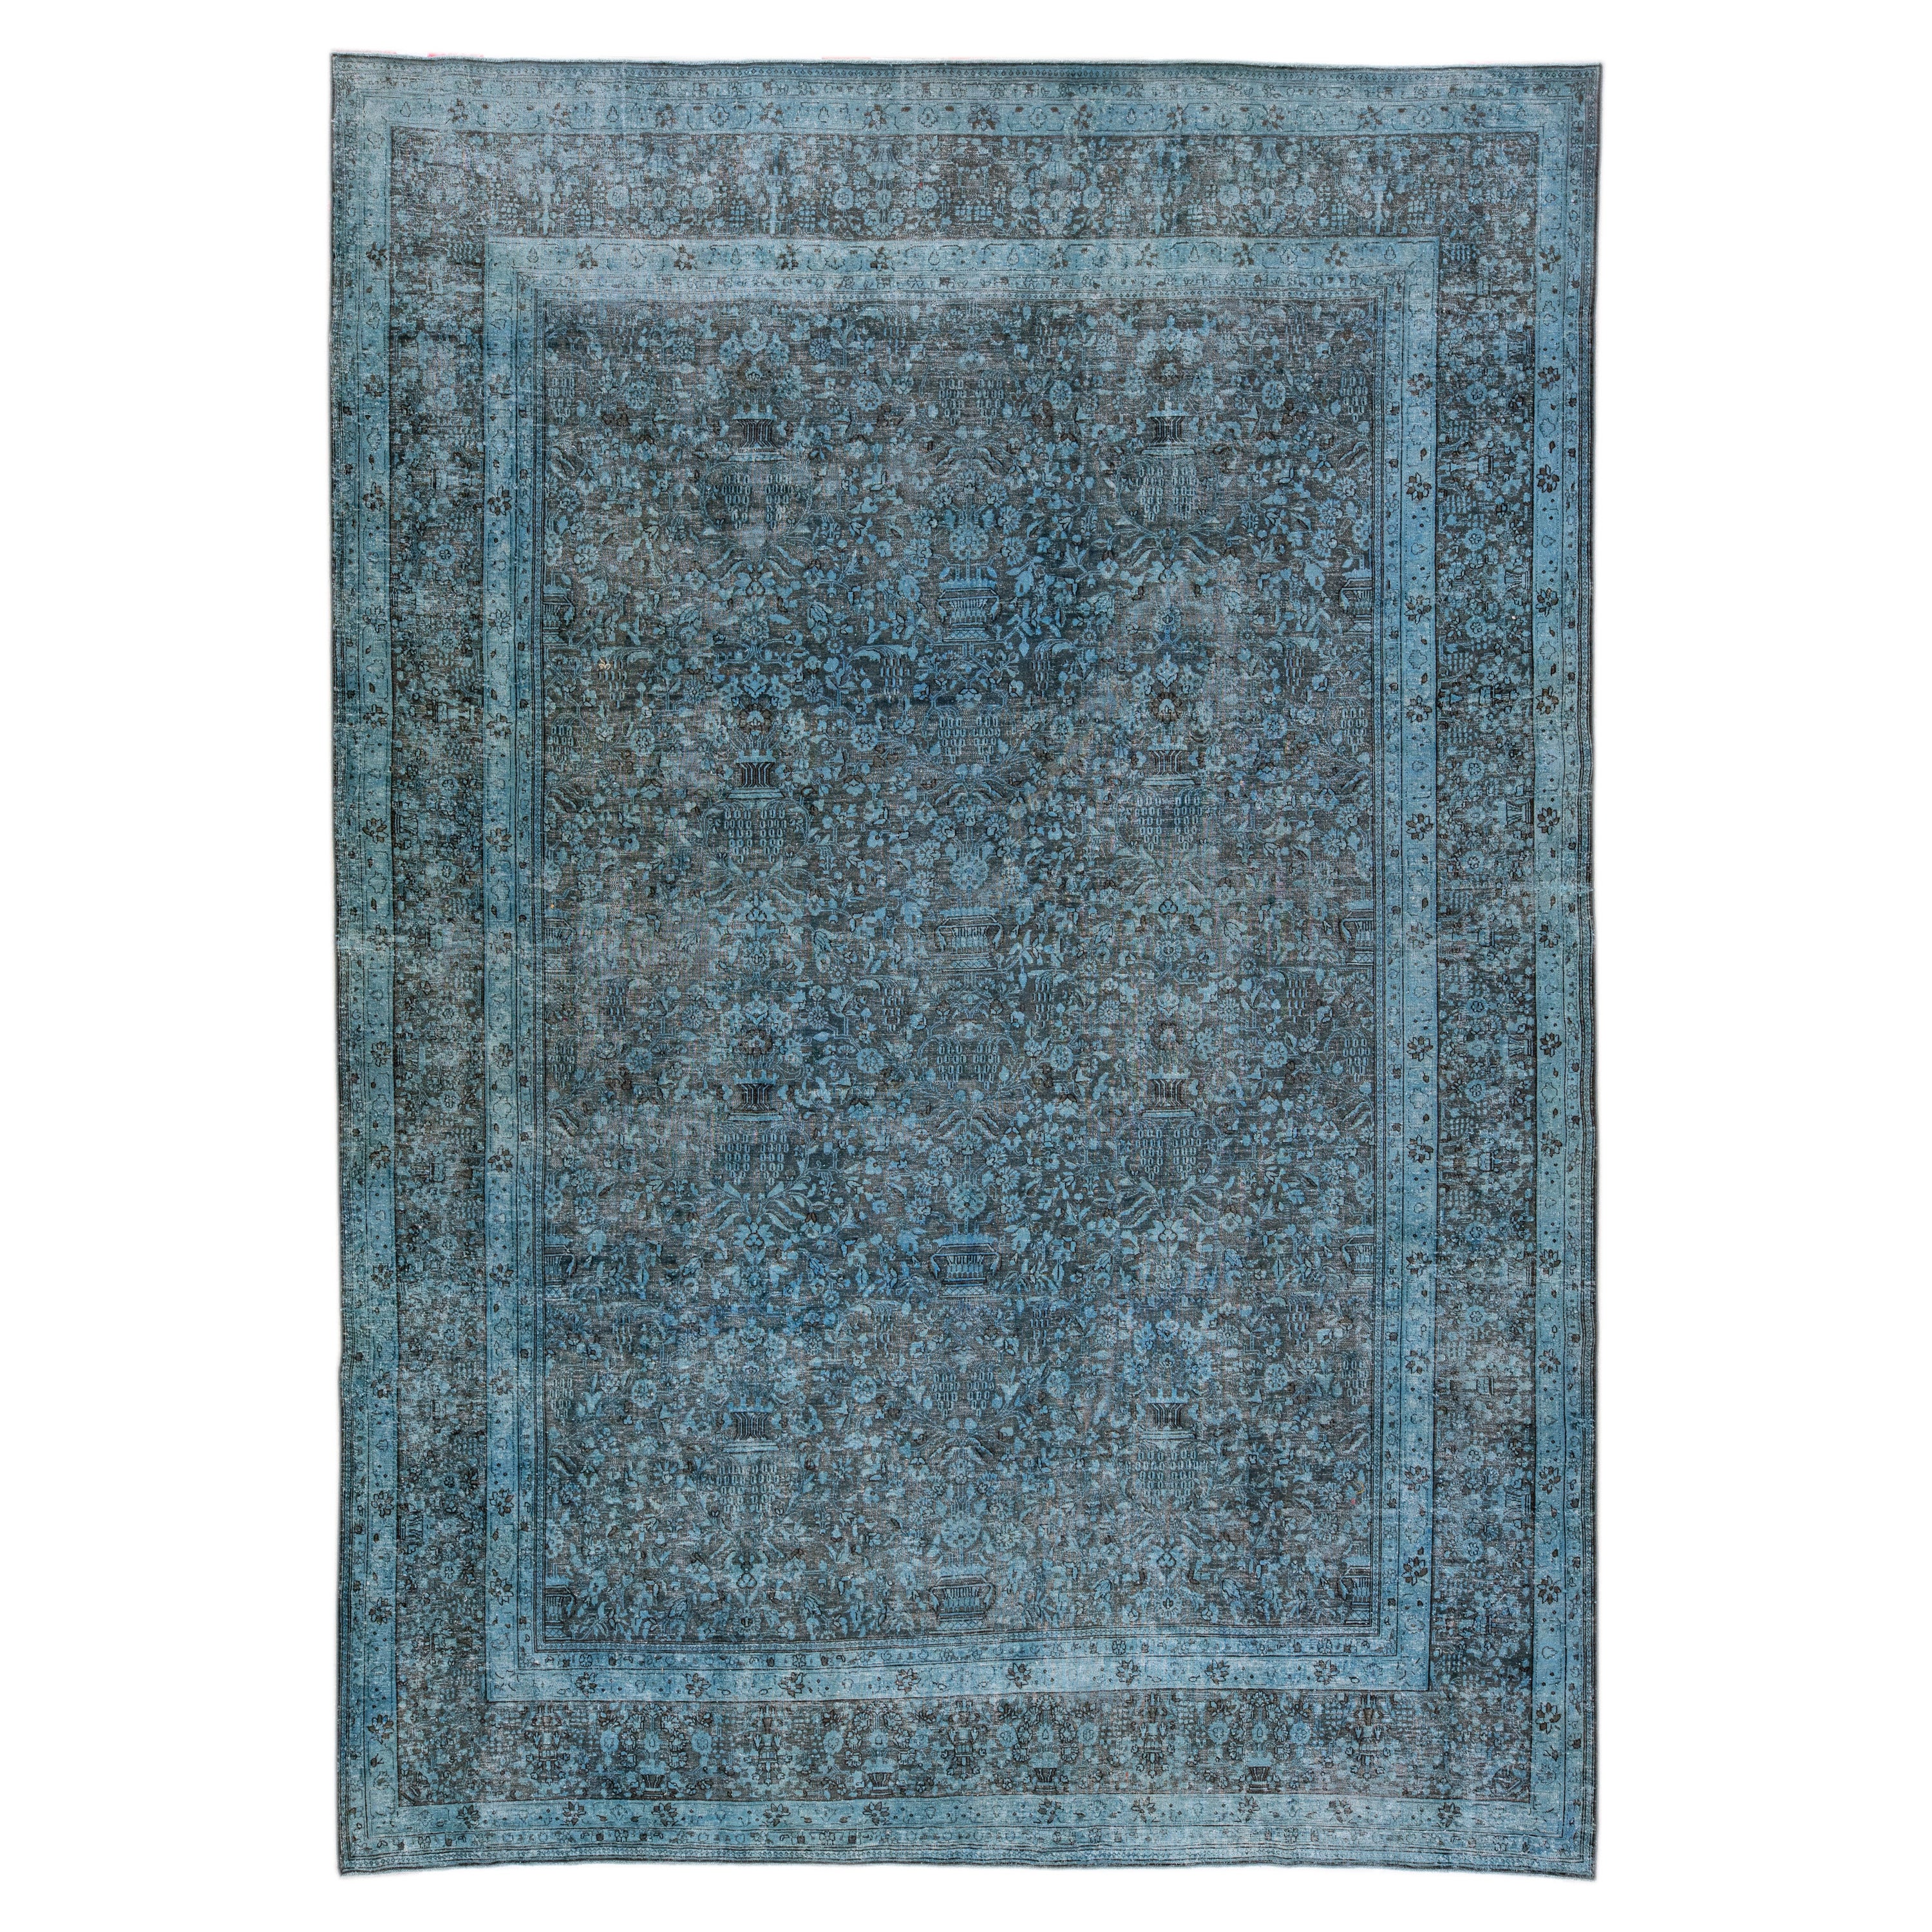 Vintage Persian Overdyed Handmade Floral Blue Wool Rug